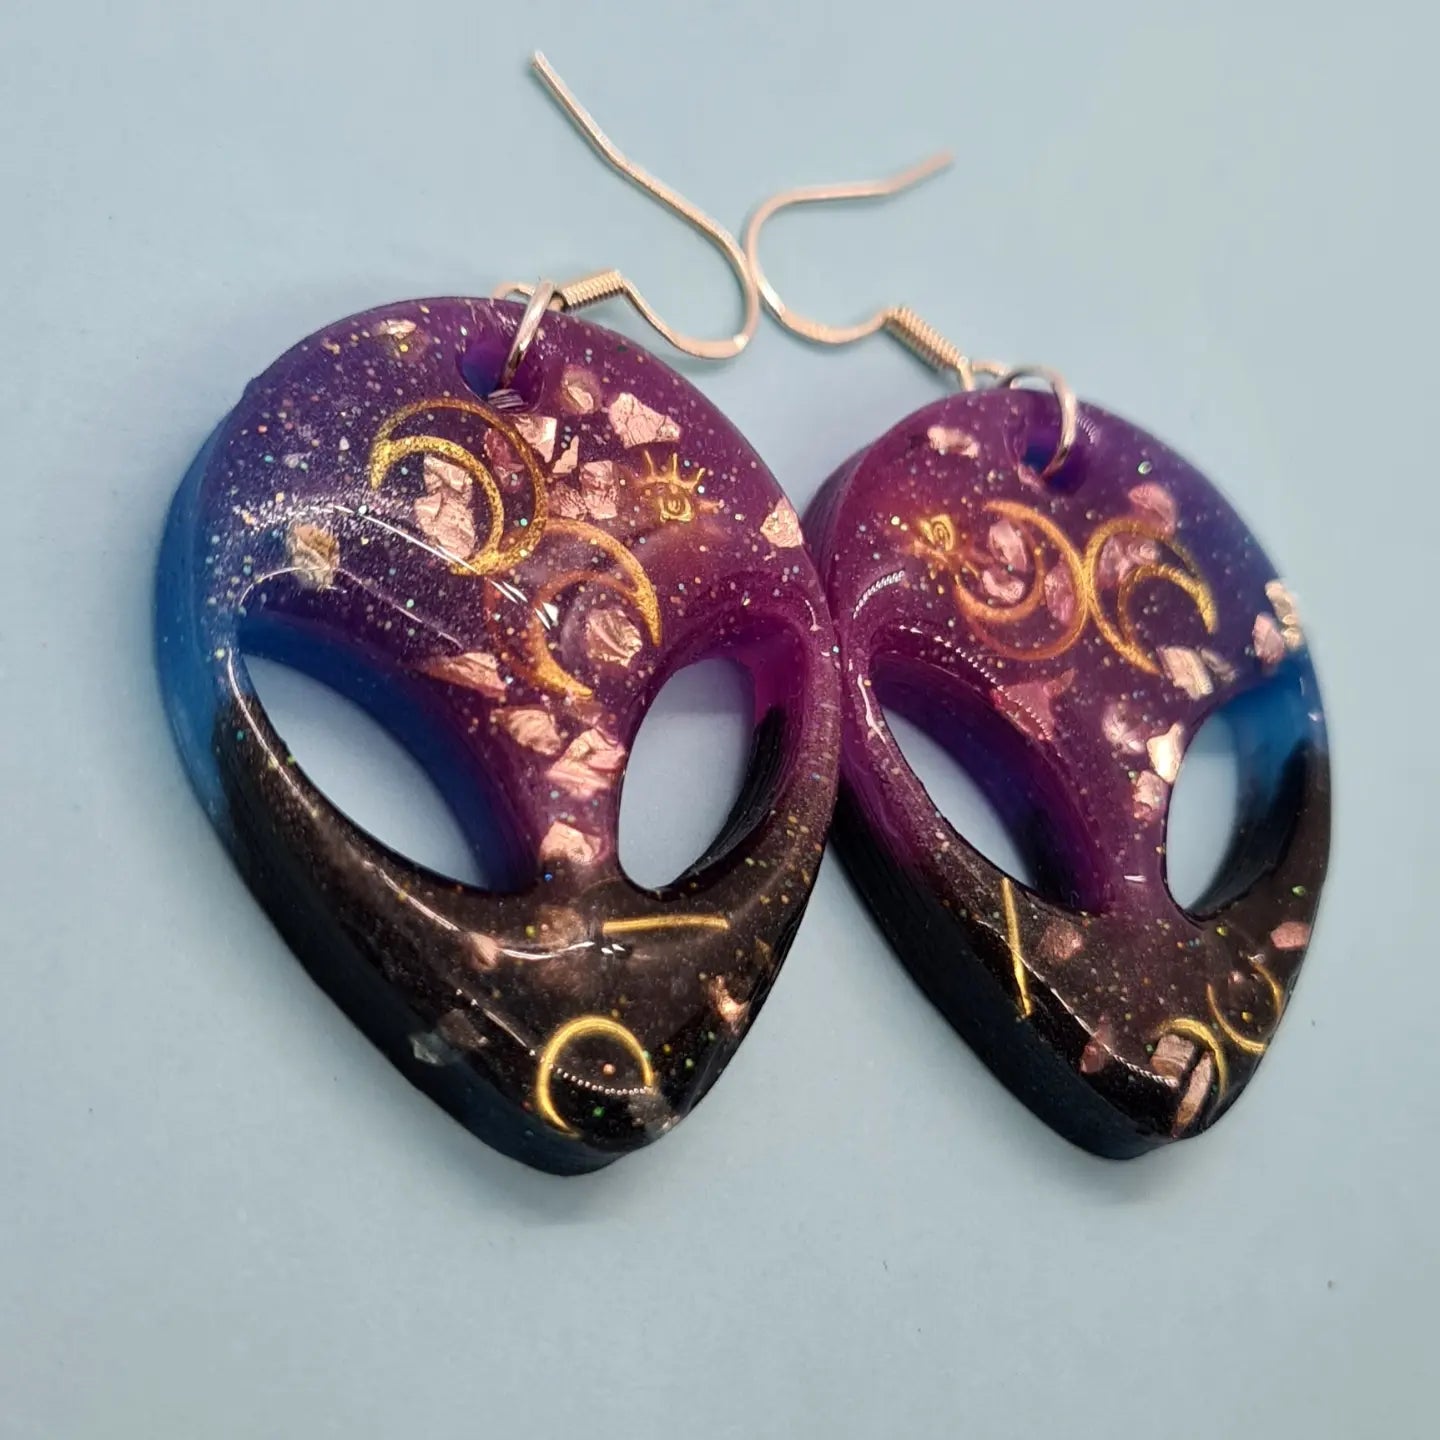 Cosmic Steve moon earrings. Pink glass and gold moon embellishment. Glow in the dark. - Strawberry Moon Jewellery 